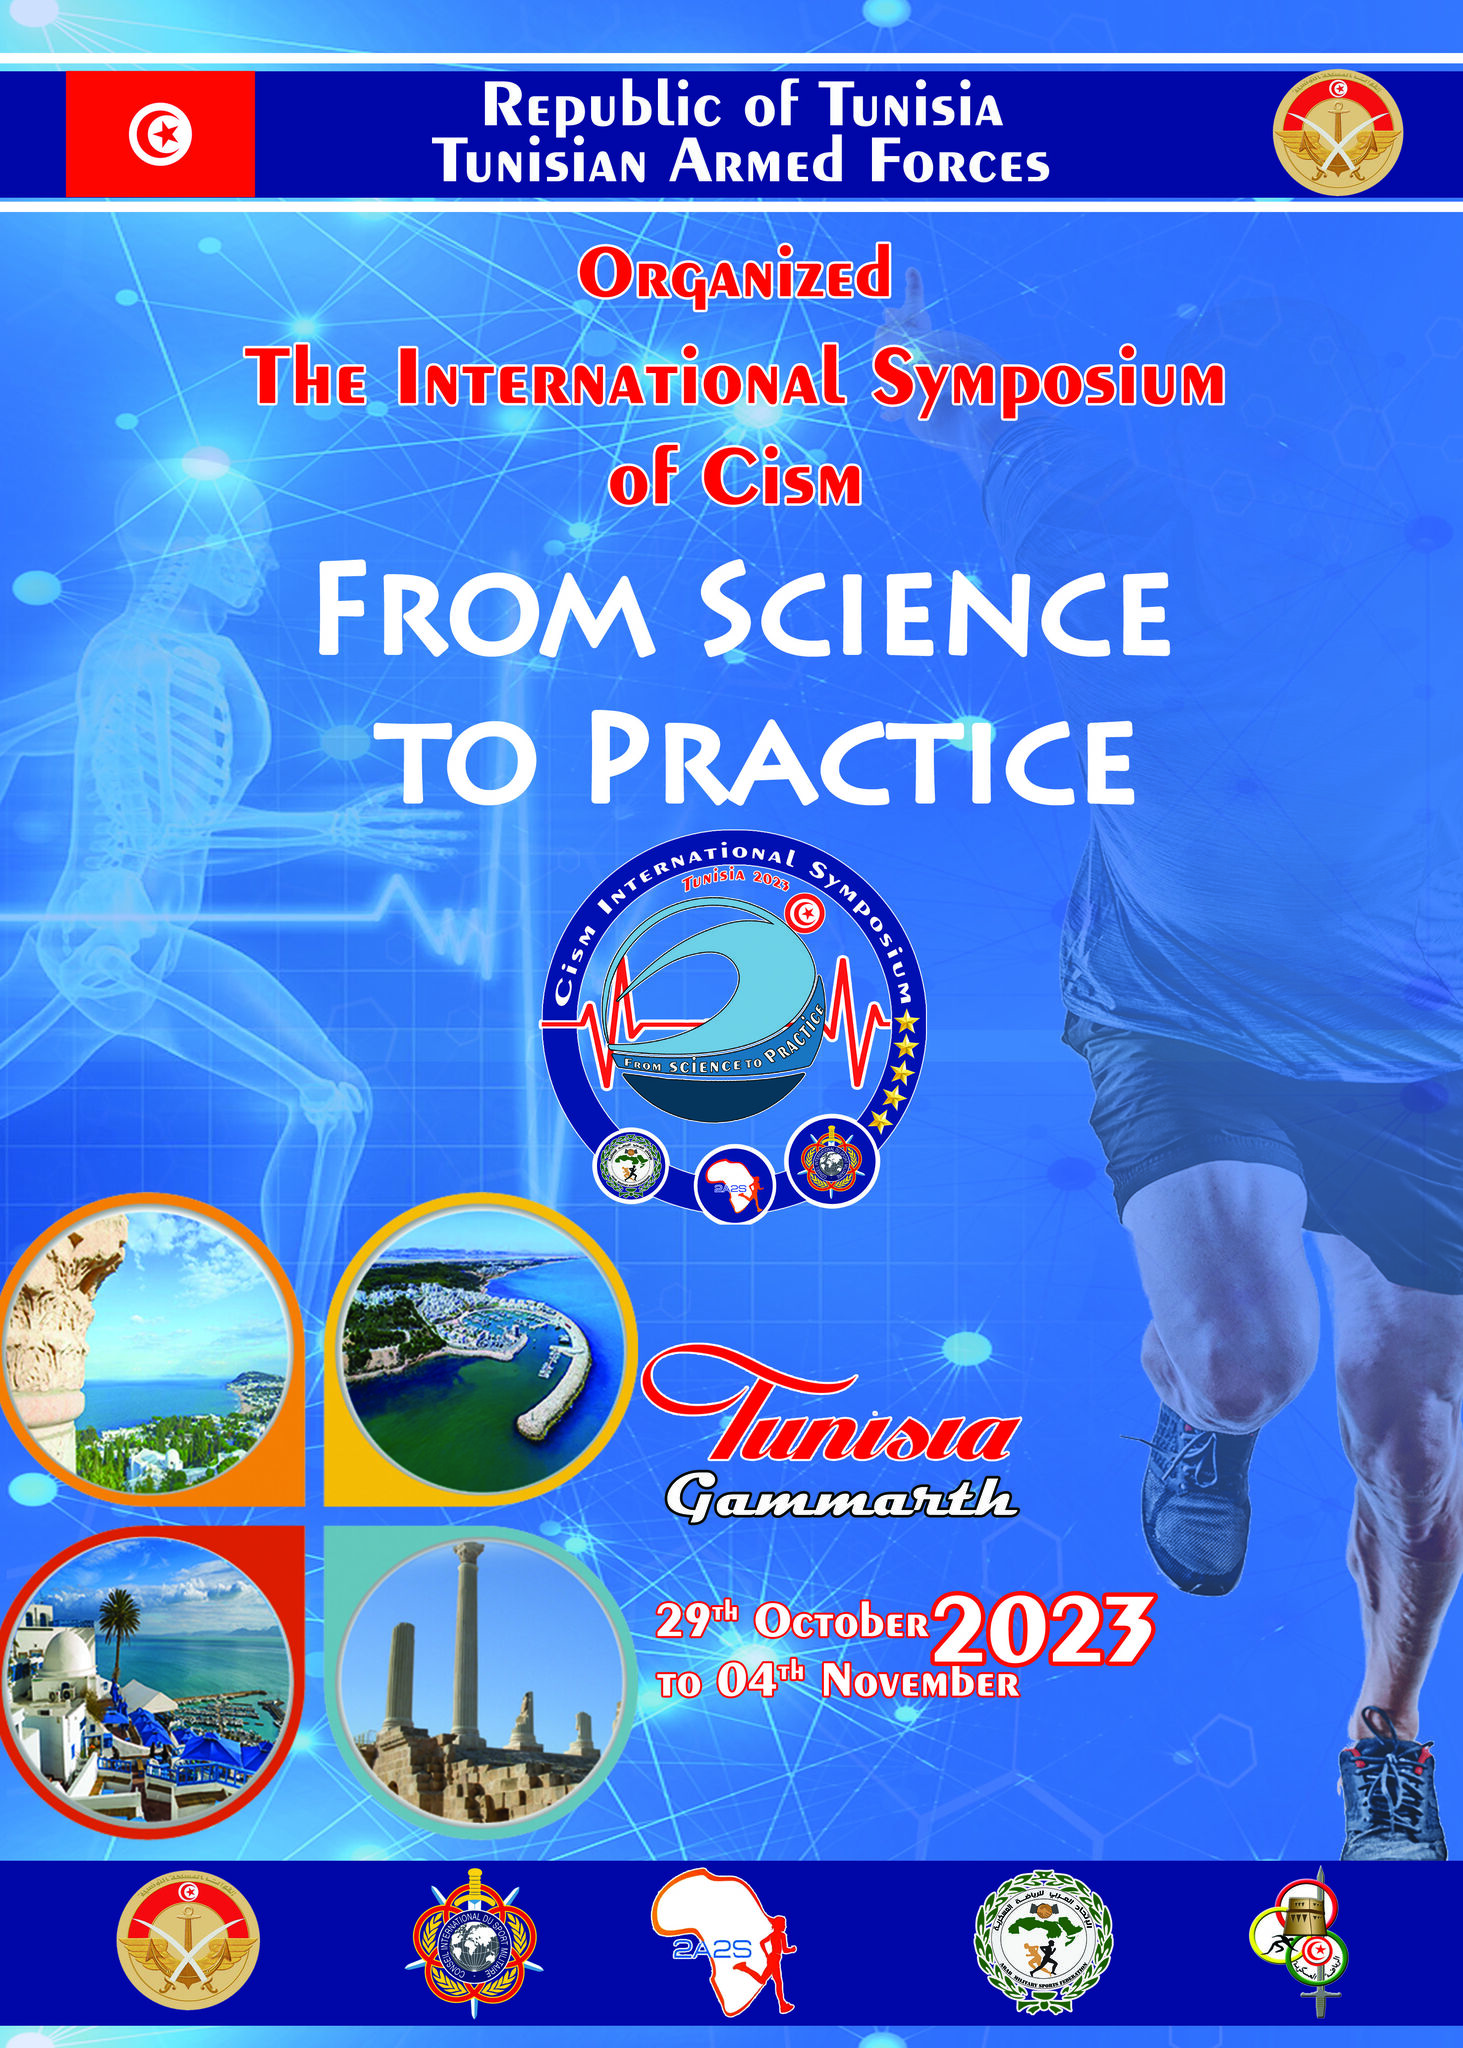 CISM International Symposium 2023   From Tunisia